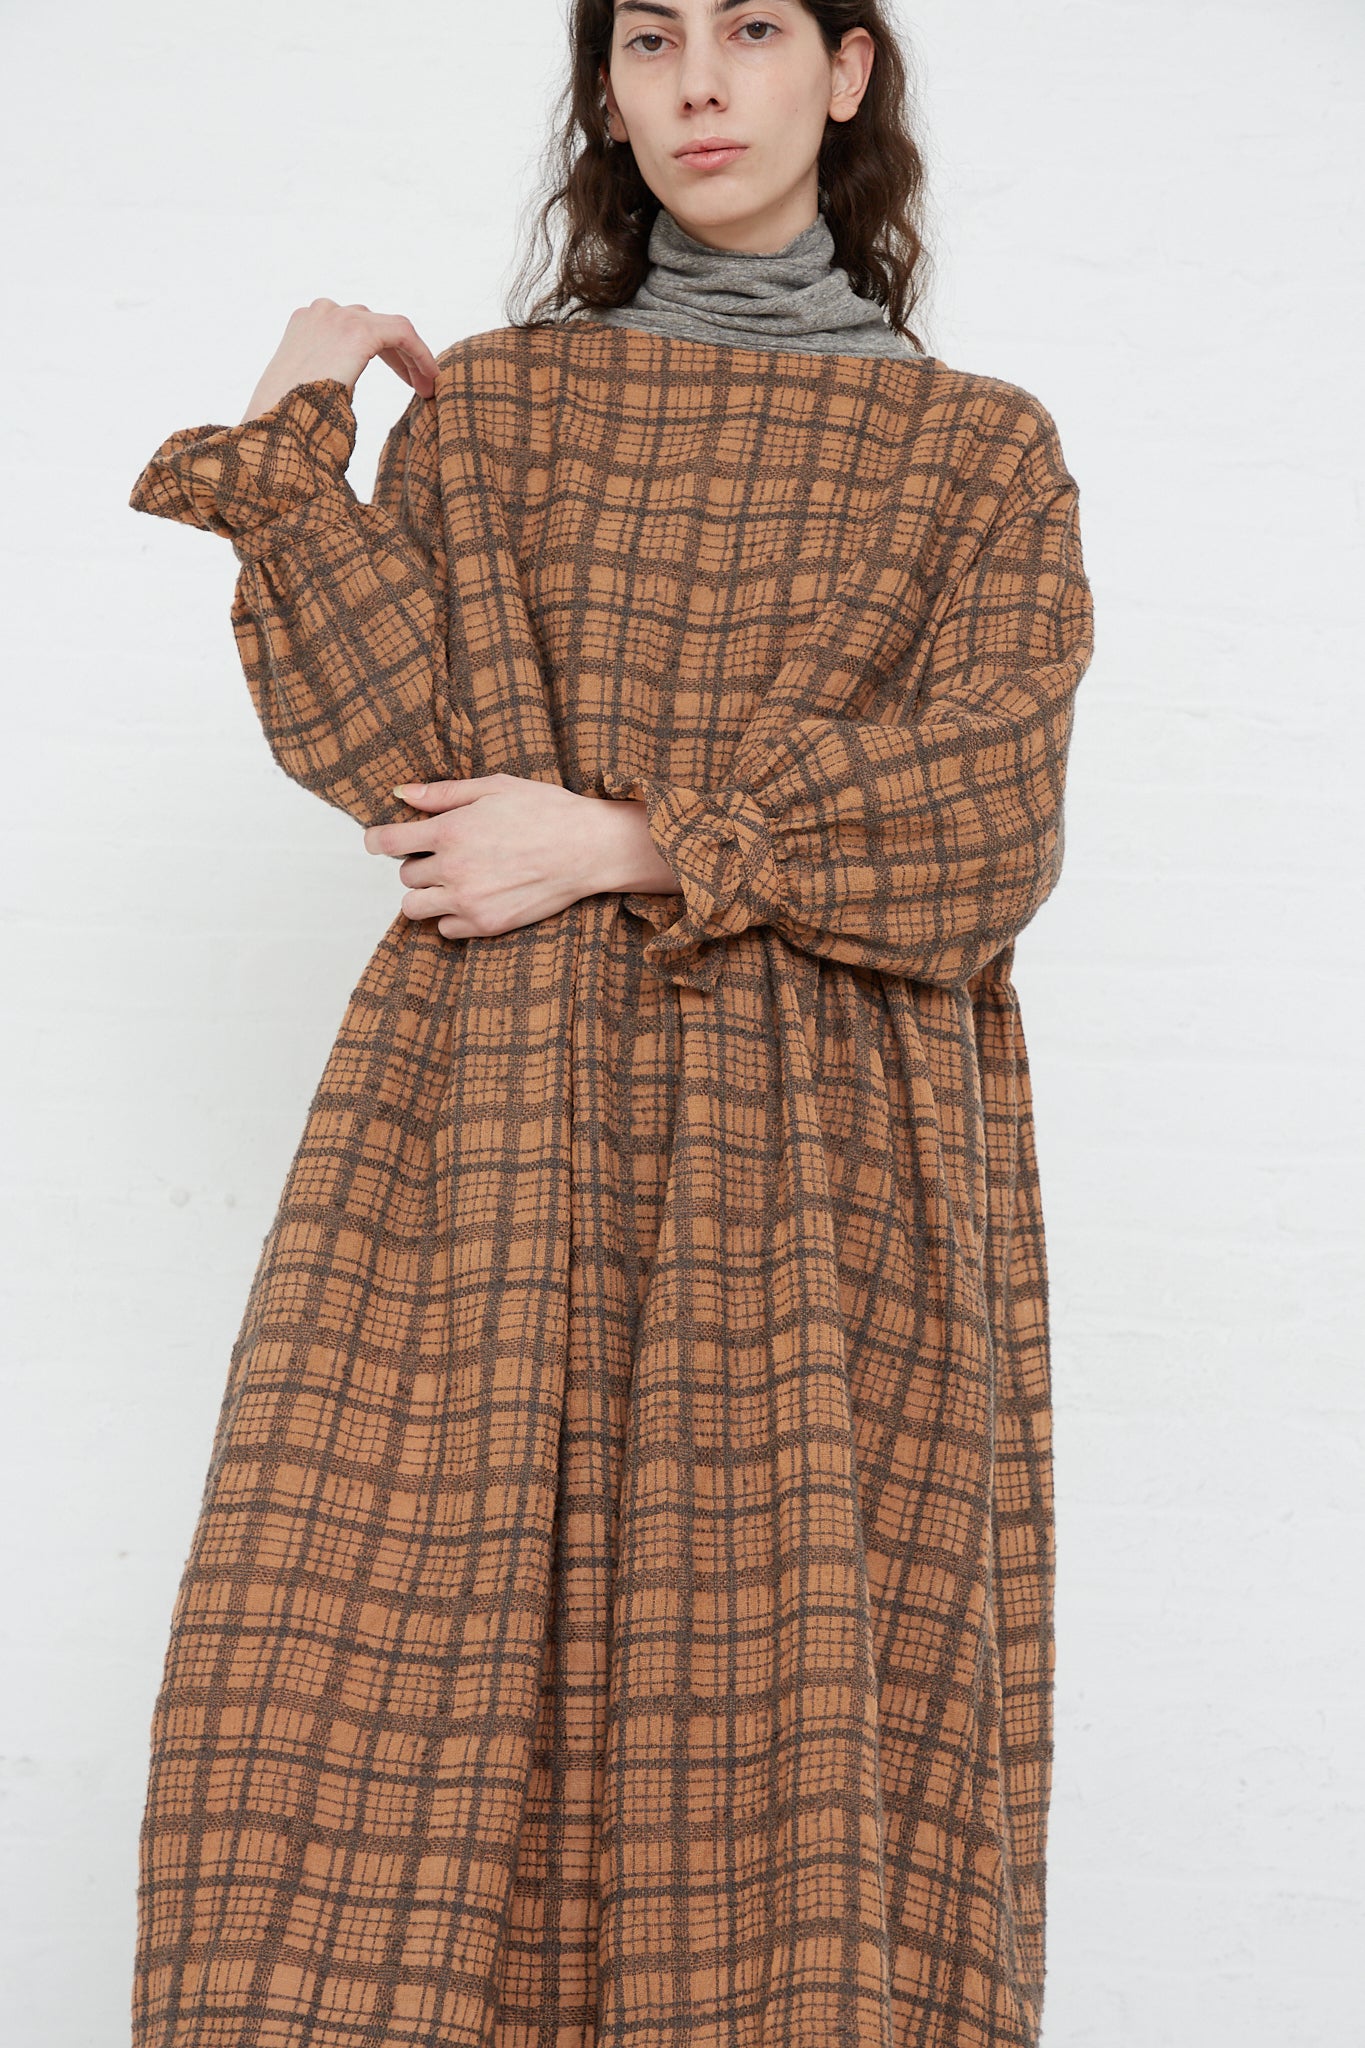 Woven Wool Check Dress in Terracotta